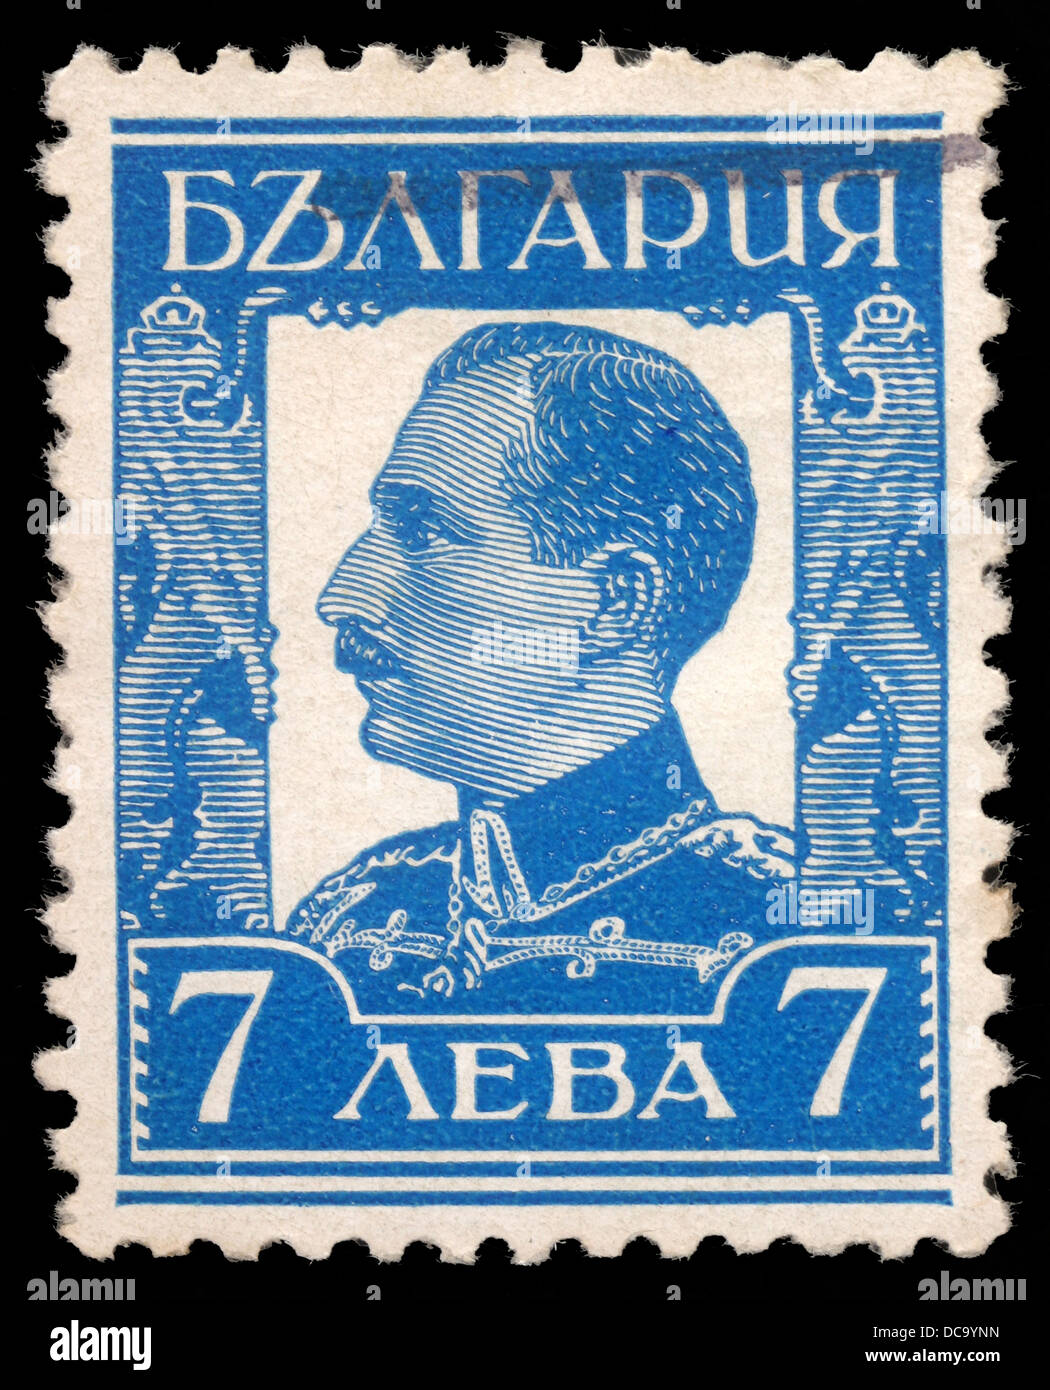 Stamp printed in Bulgaria shows a portrait of Tsar Ferdinand from the series 'Tsar Boris', circa 1931 Stock Photo